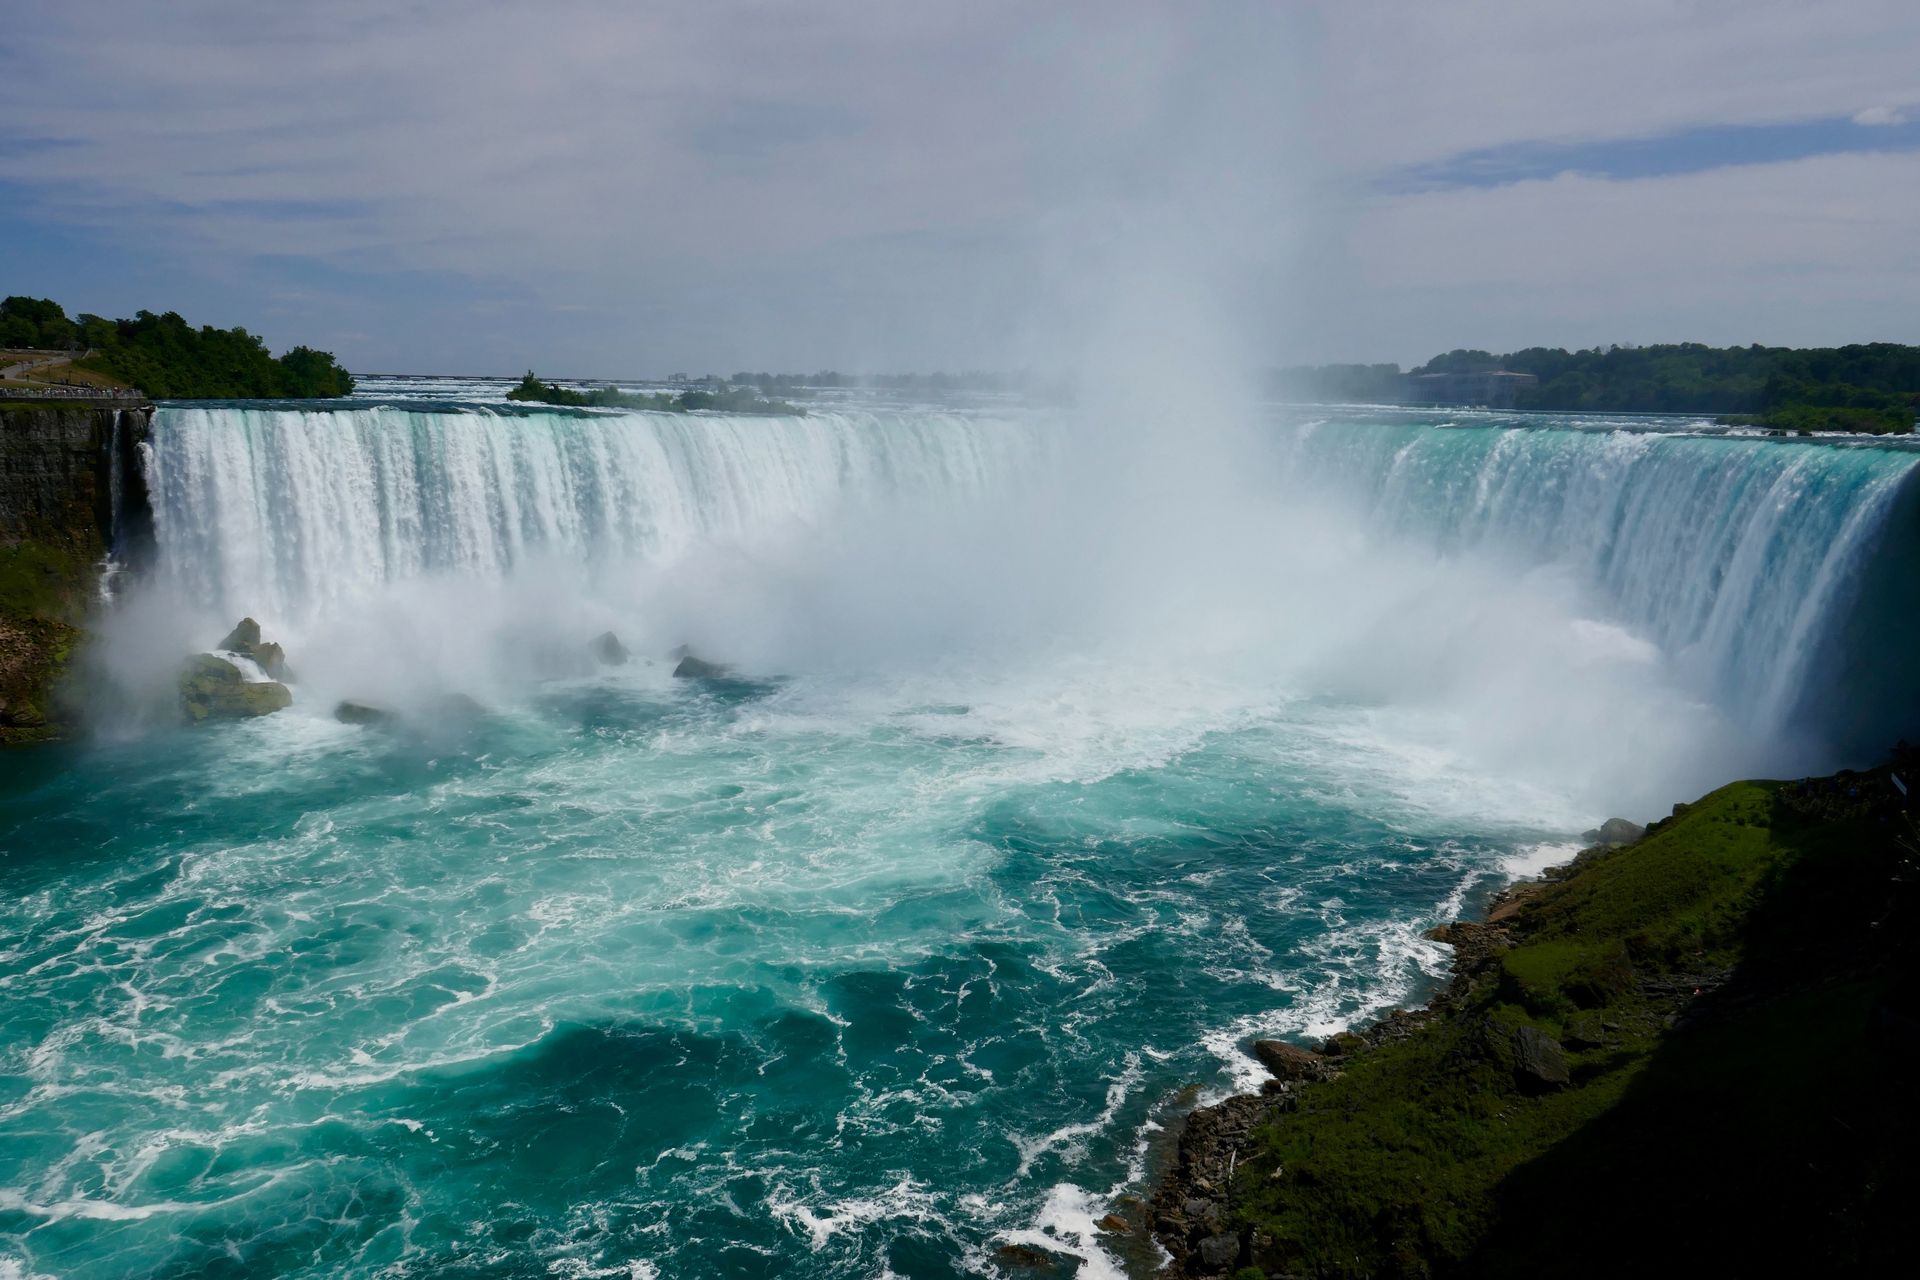 Reizen naar Toronto & Niagara Falls - Exit Reizen, de Canadaspecialist